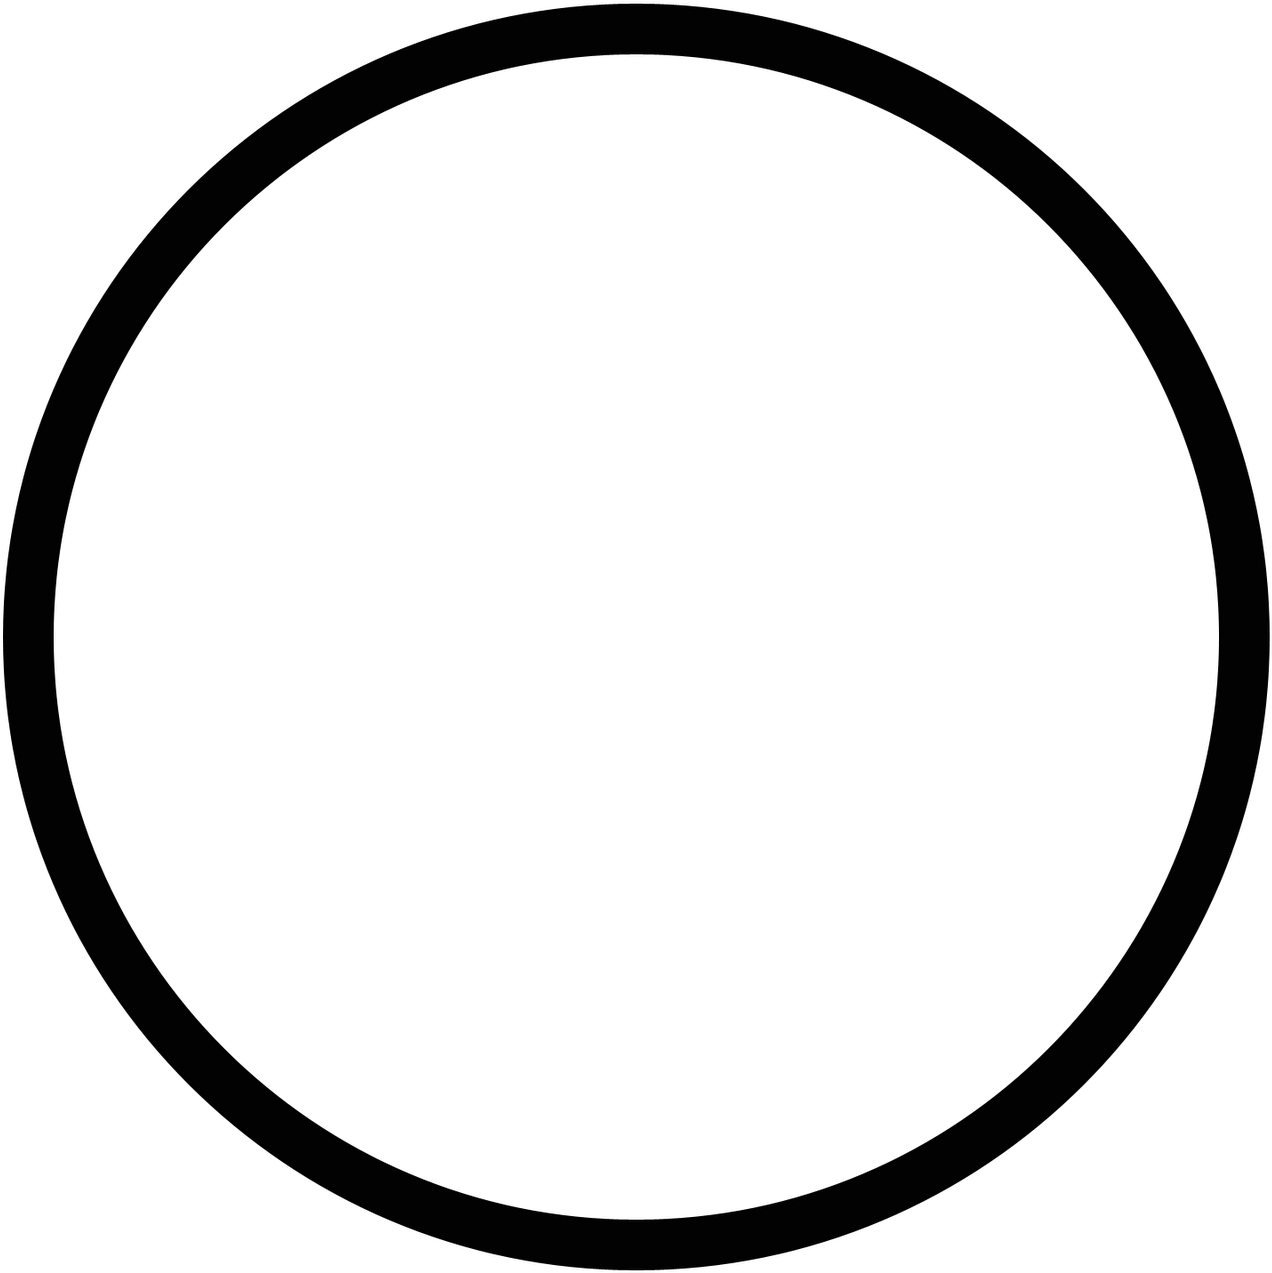 Minus In A Circle (1600x1600)